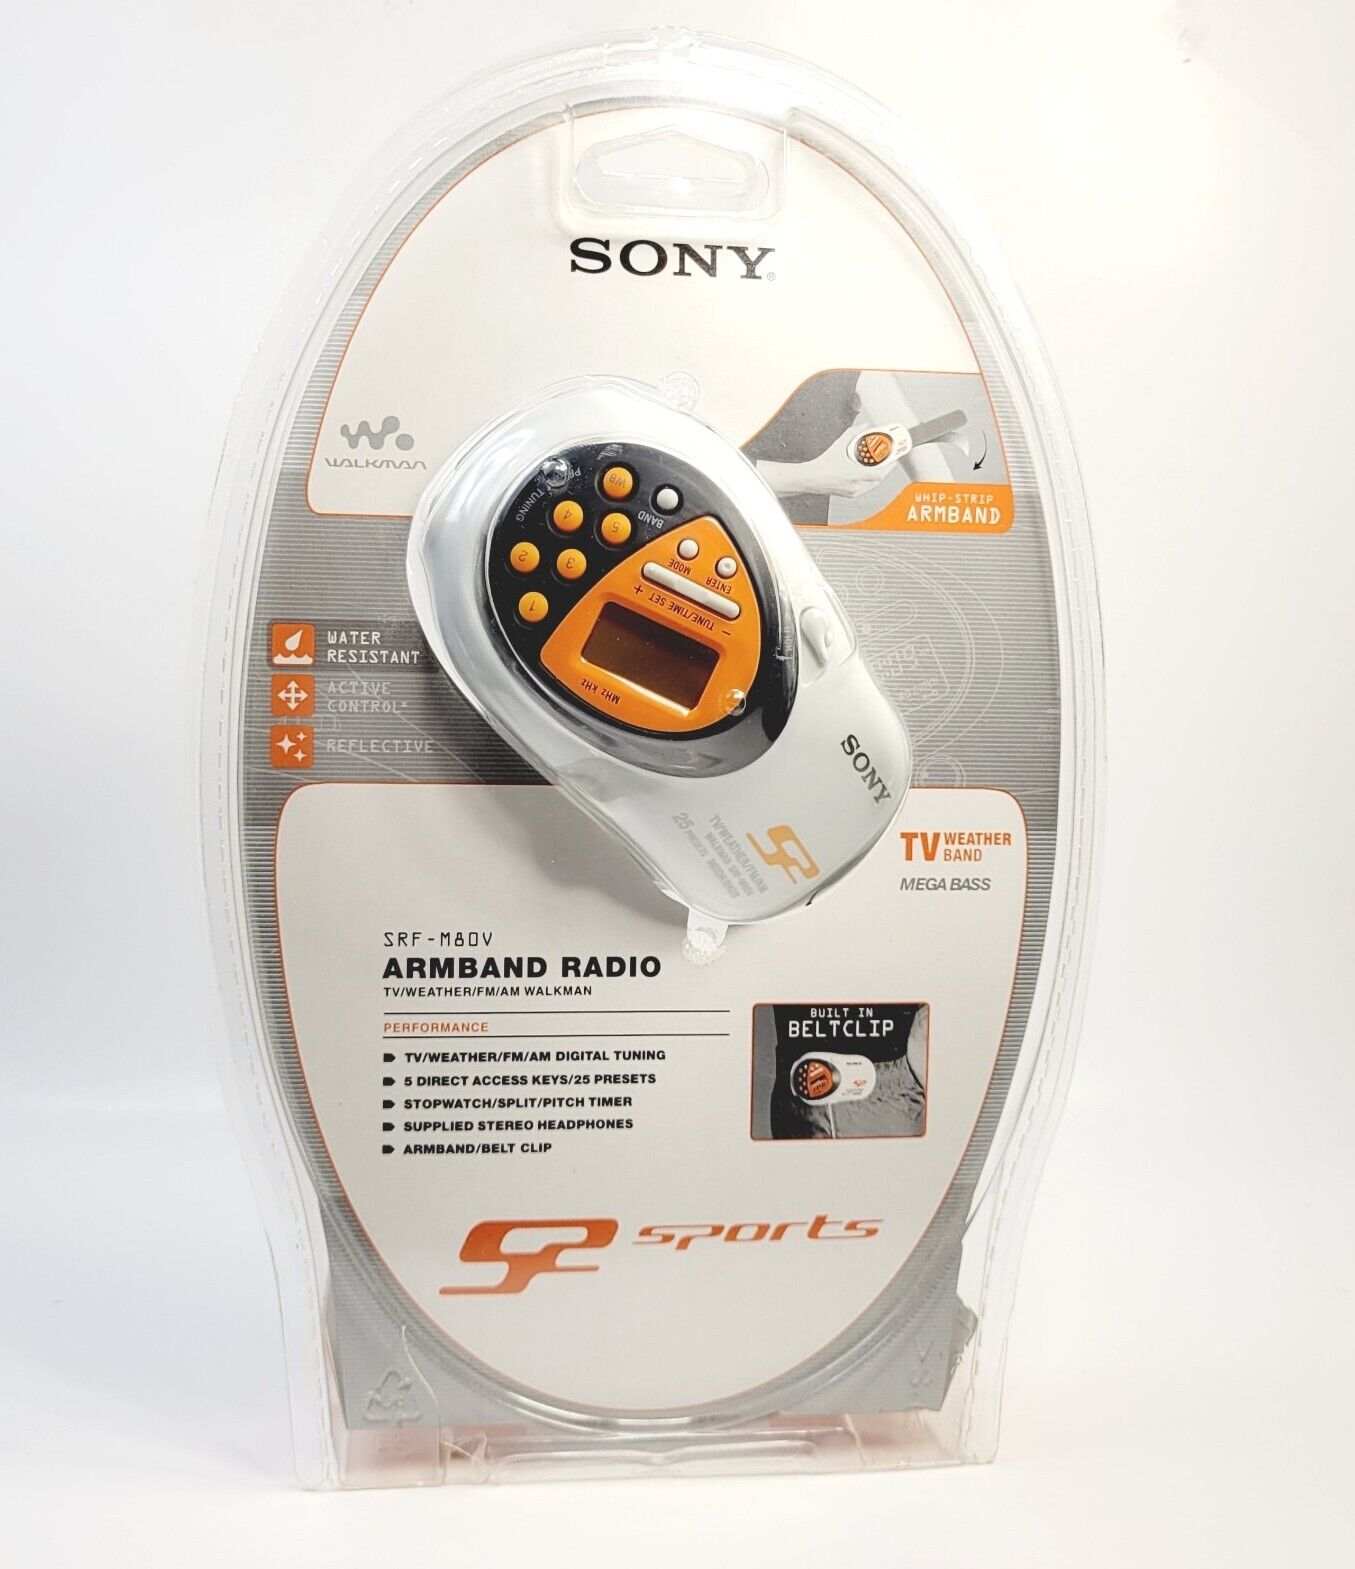 Sony Armband Radio (SRF-M80V) Walkman. Water Resistant, FM/AM/TV/Weather New NIP